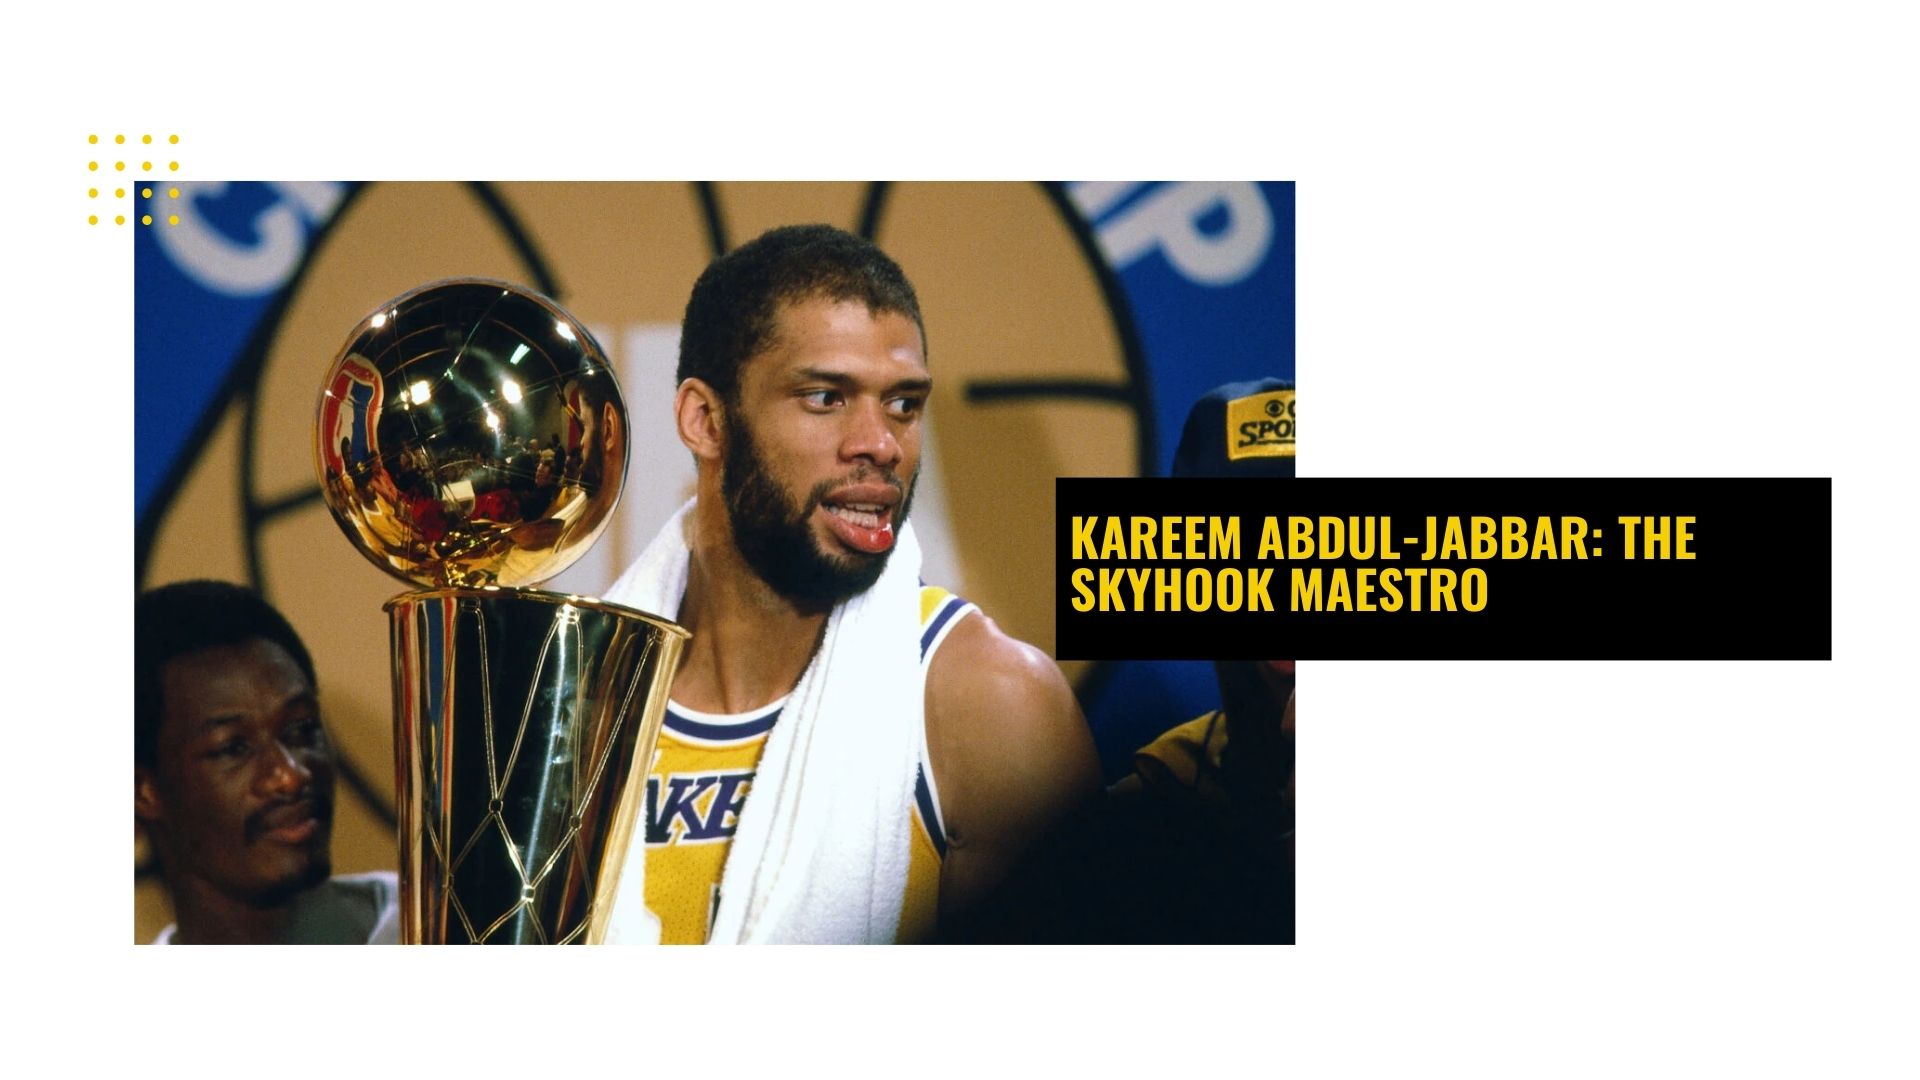 Kareem Abdul-Jabbar: The Skyhook Maestro